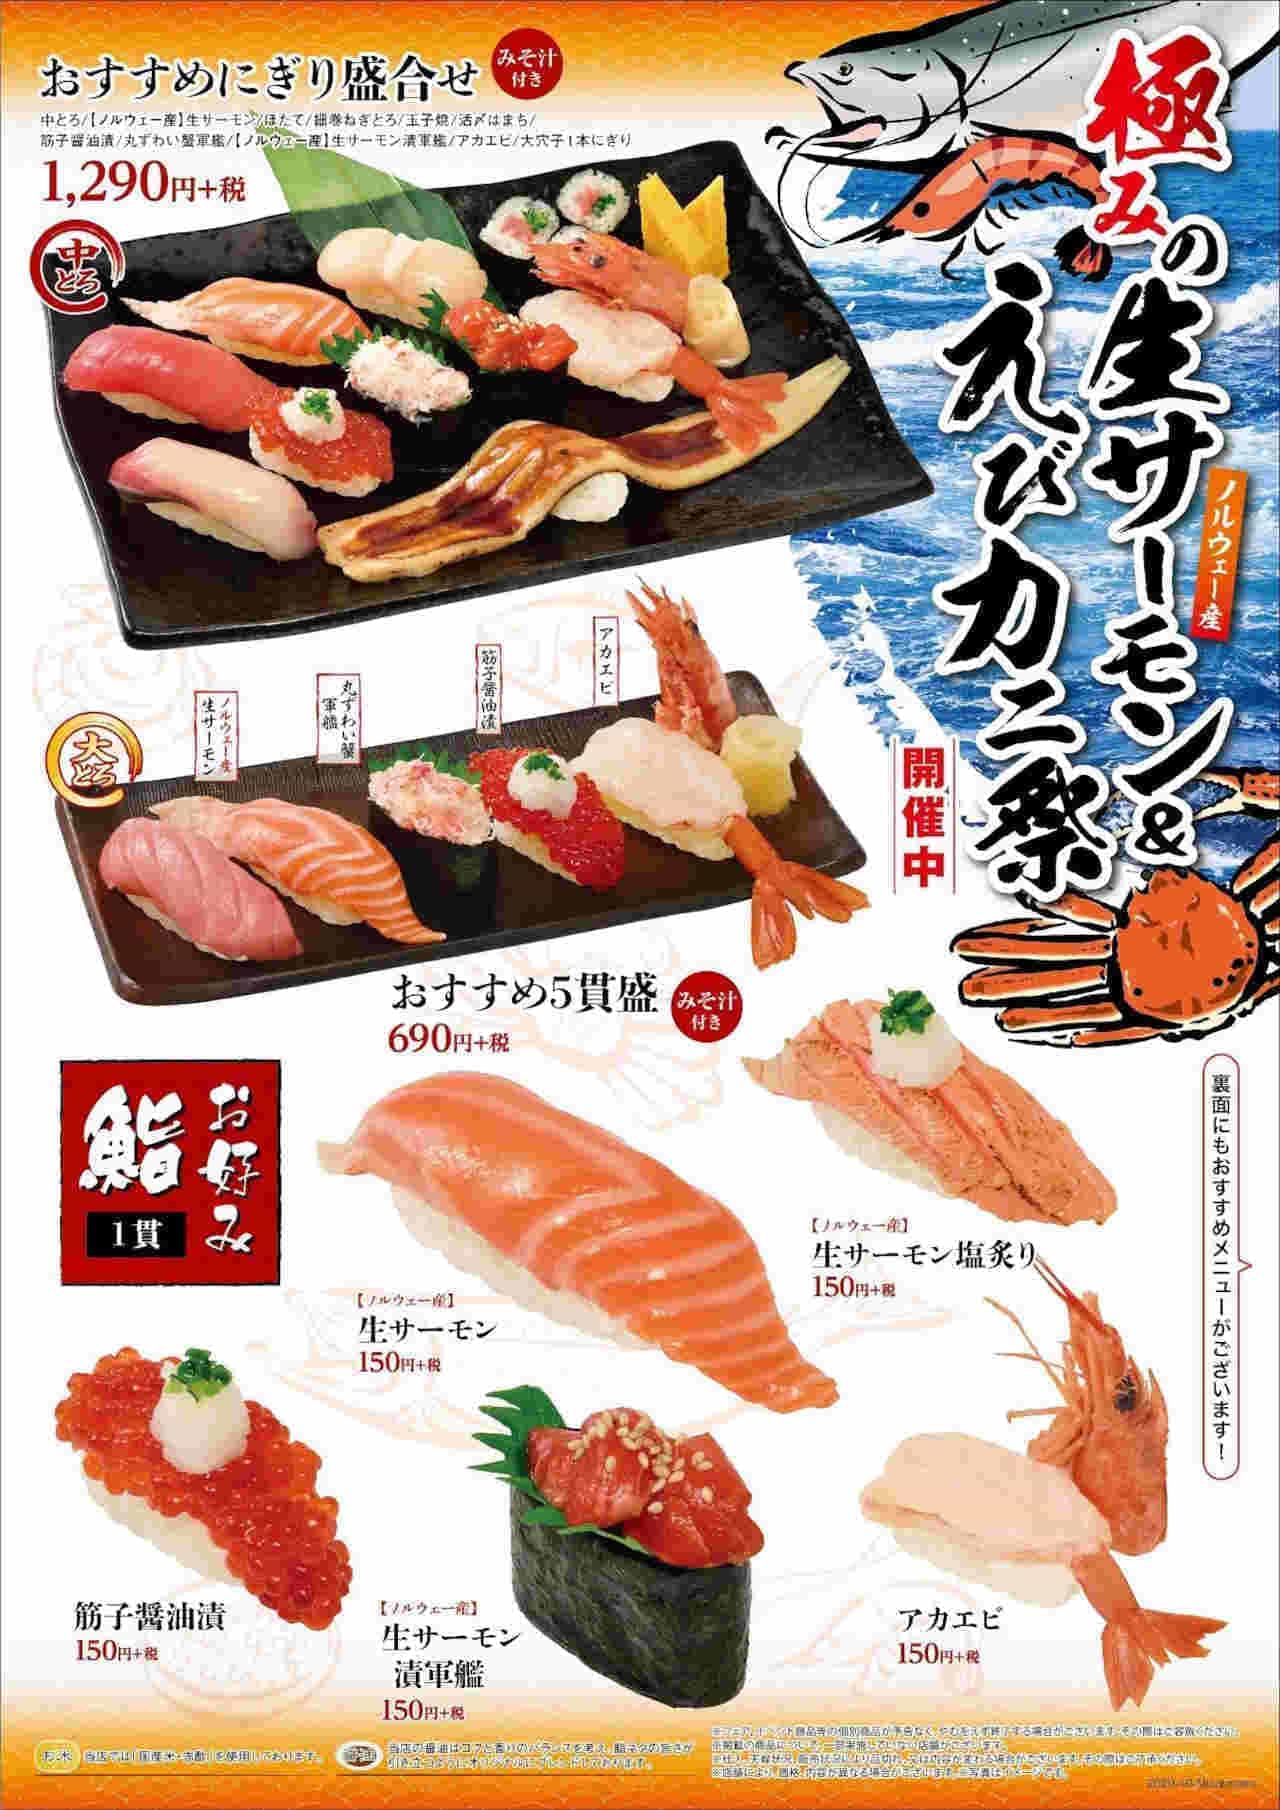 "Extreme Raw Salmon & Shrimp Crab Festival" at Sushi Misaki Maru